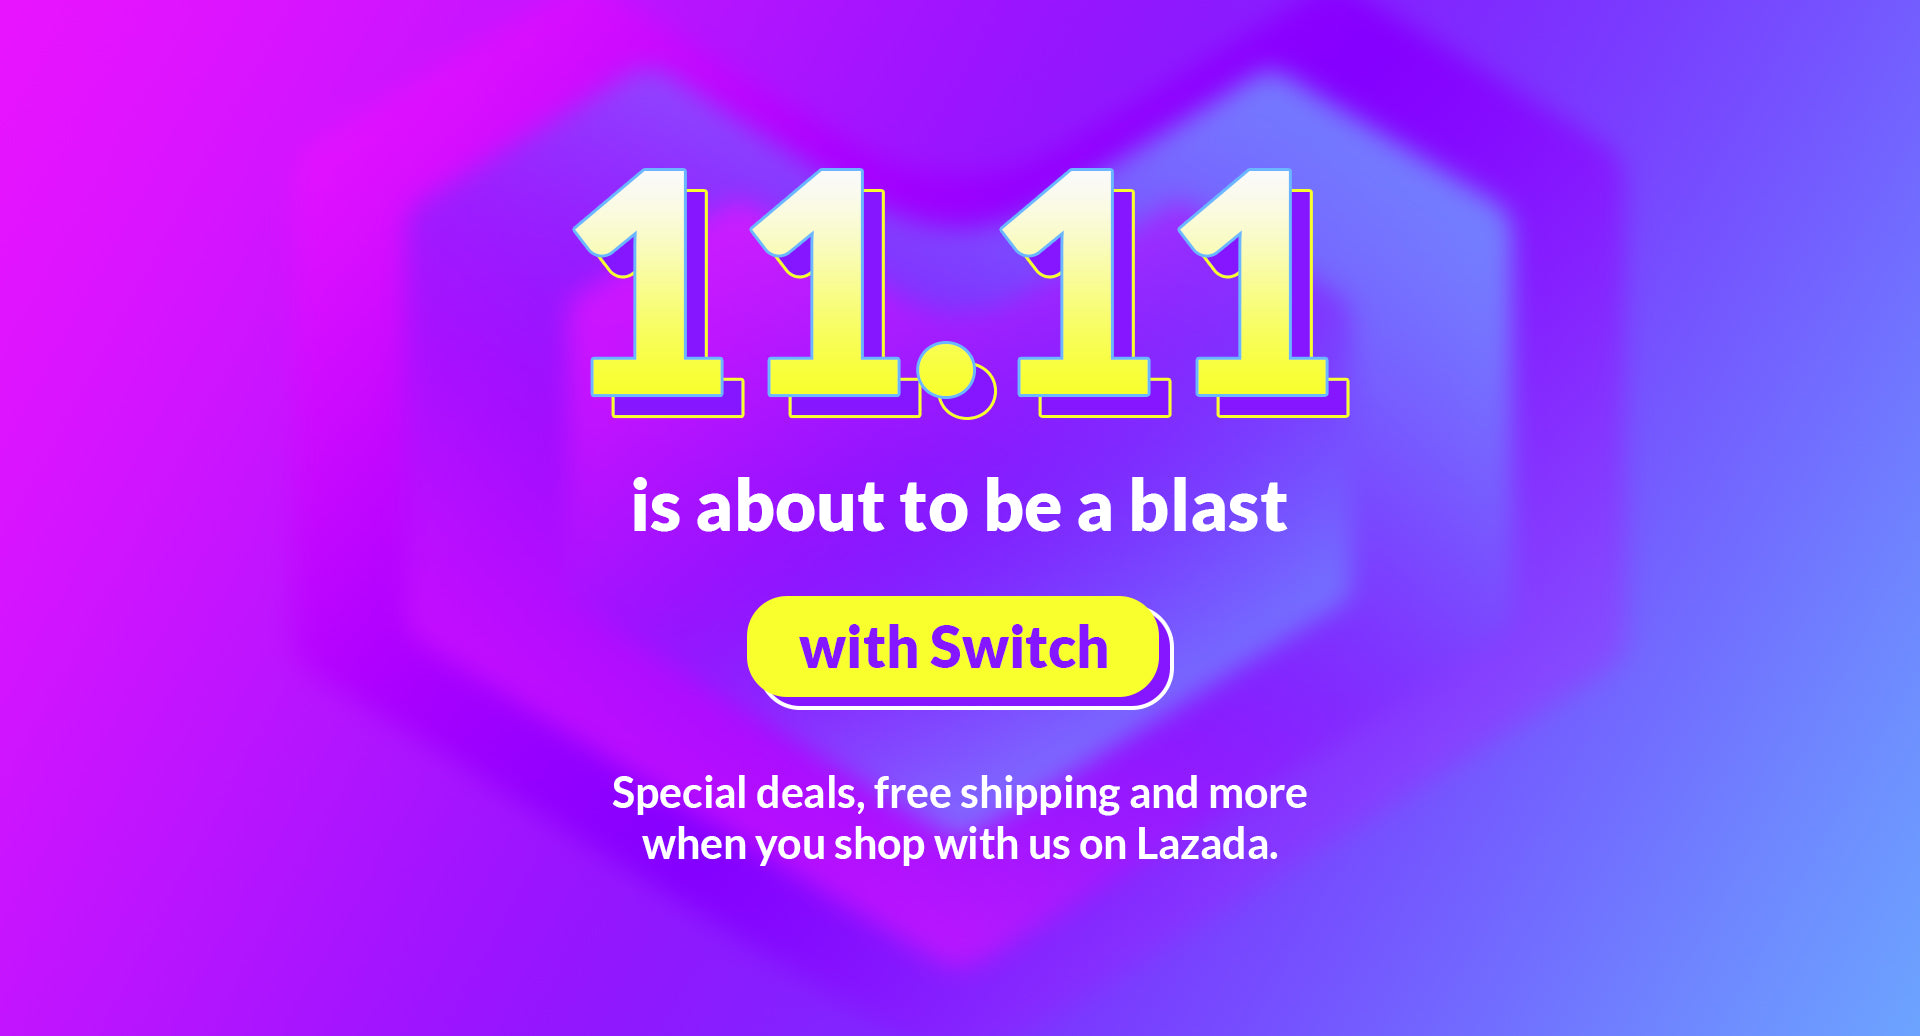 Celebrate 11.11 with Switch on Lazada!